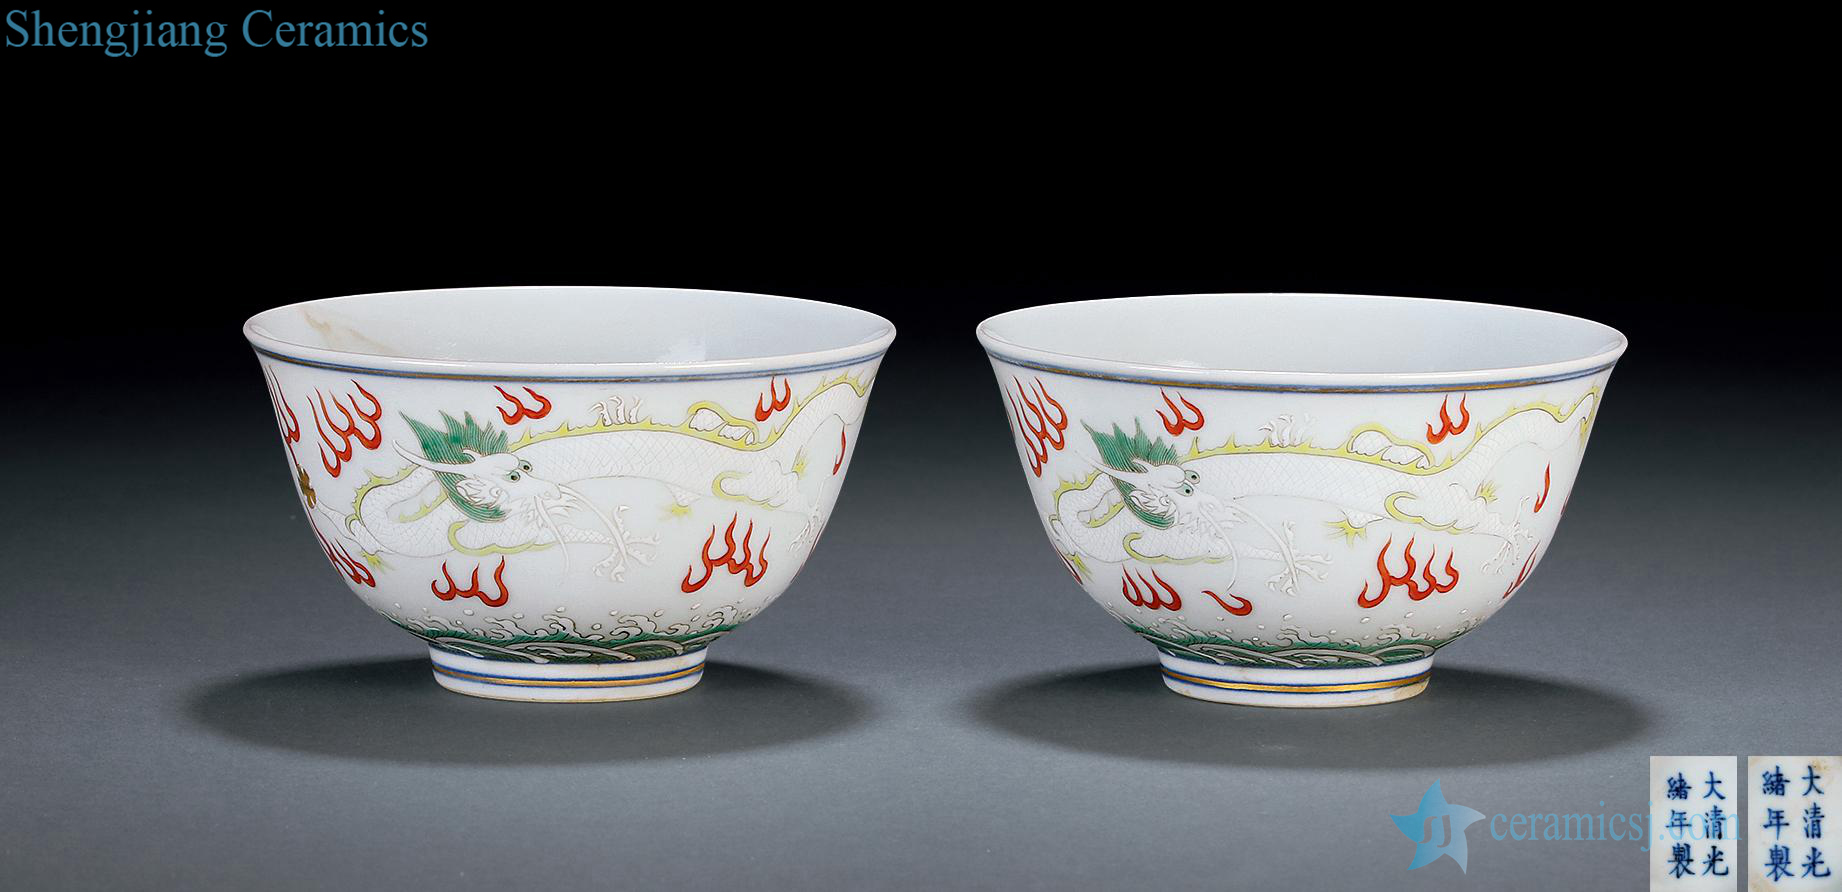 Ssangyong catch beads reign of qing emperor guangxu green-splashed bowls (a)